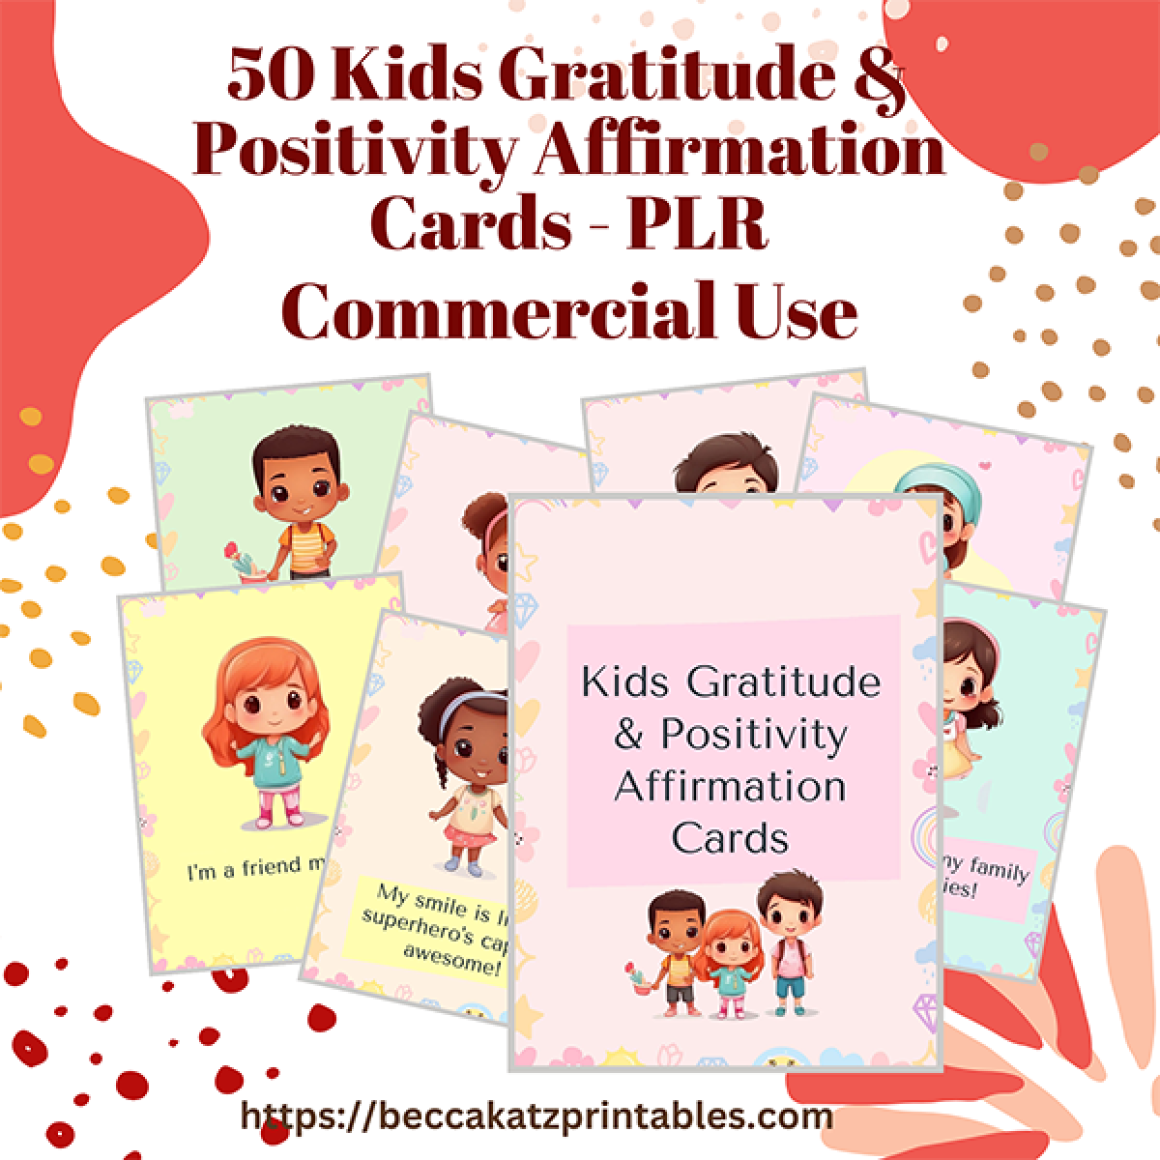 50 Kids Gratitude & Positivity Affirmation Cards - PLR